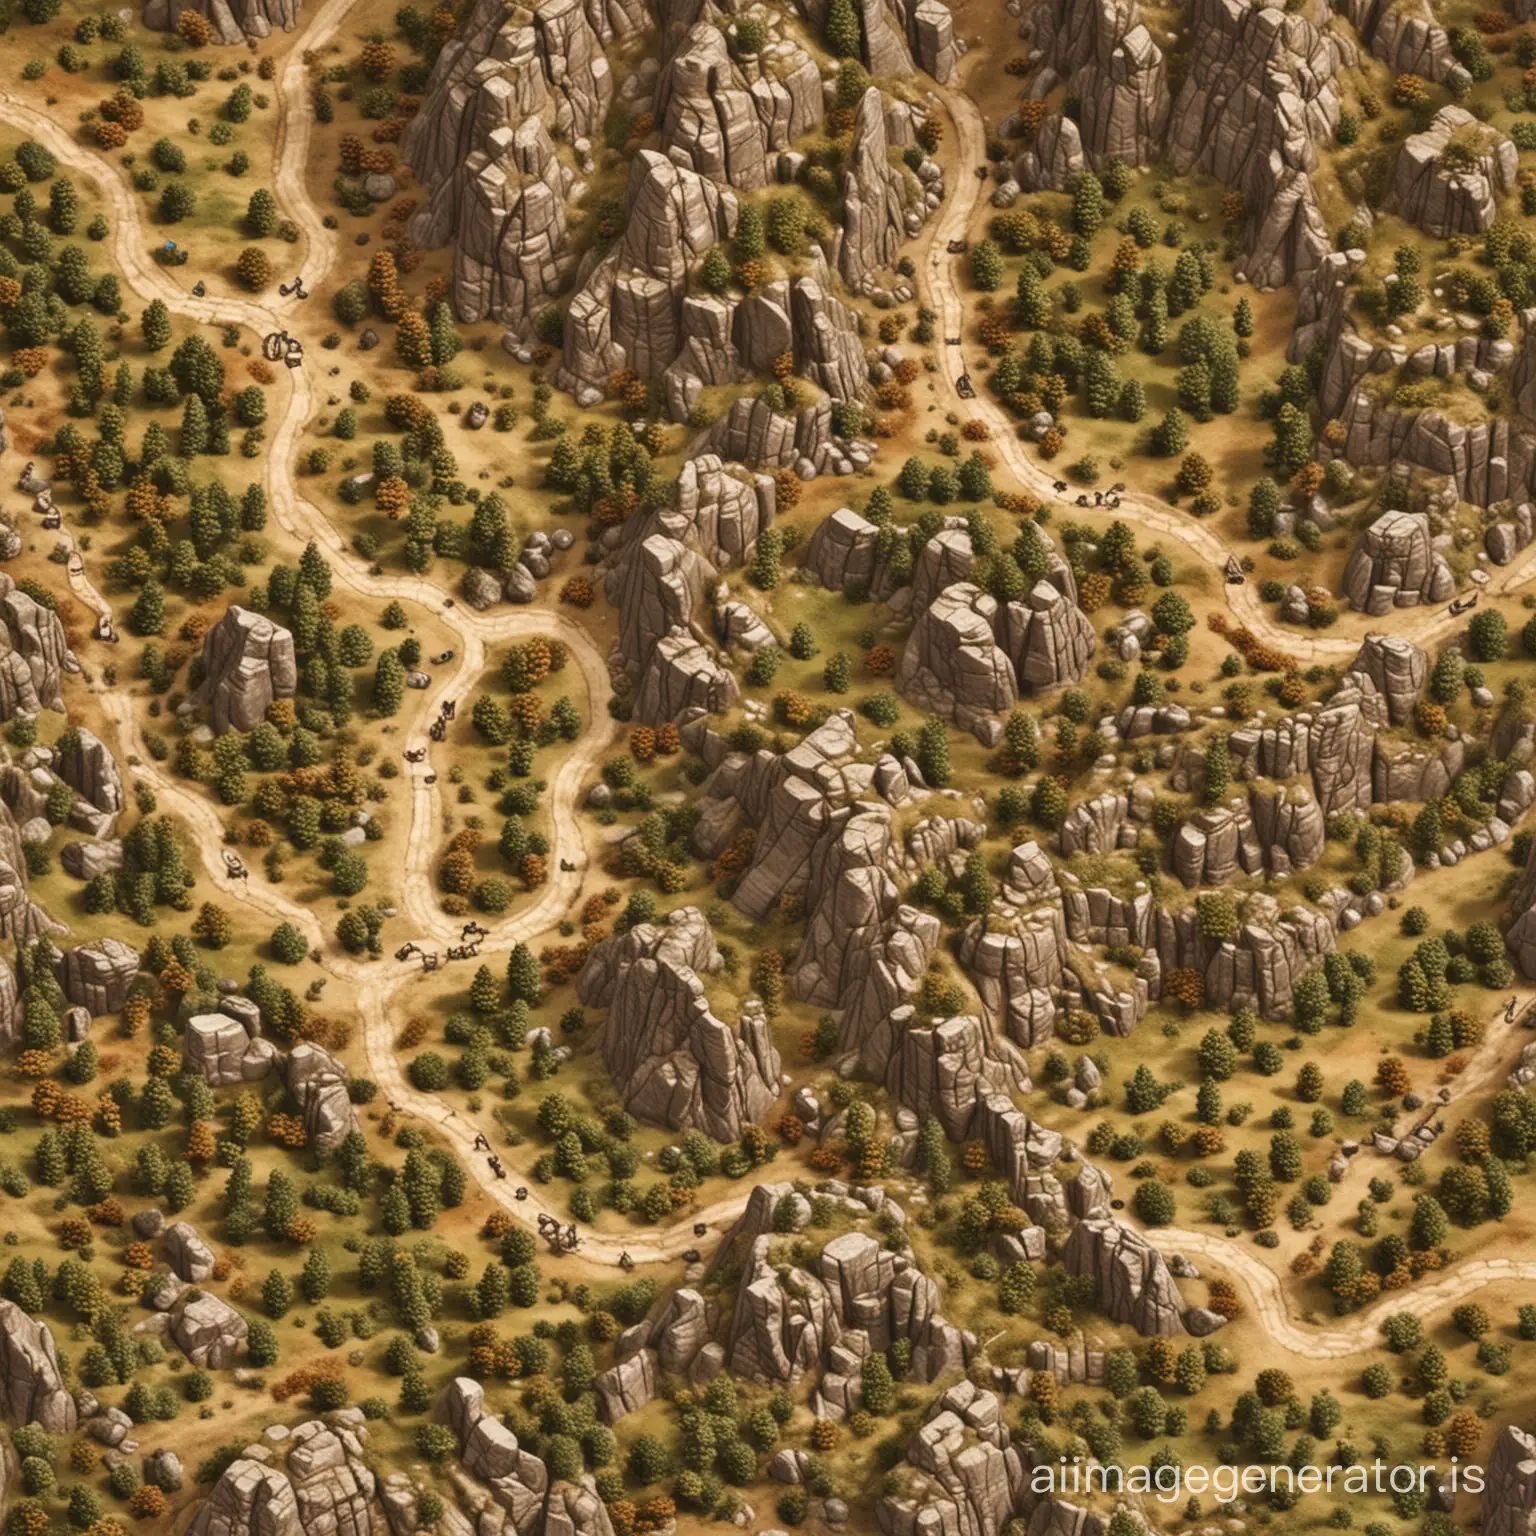 battle map for ttrpg
mountain terrain 
rustic path along a canyon